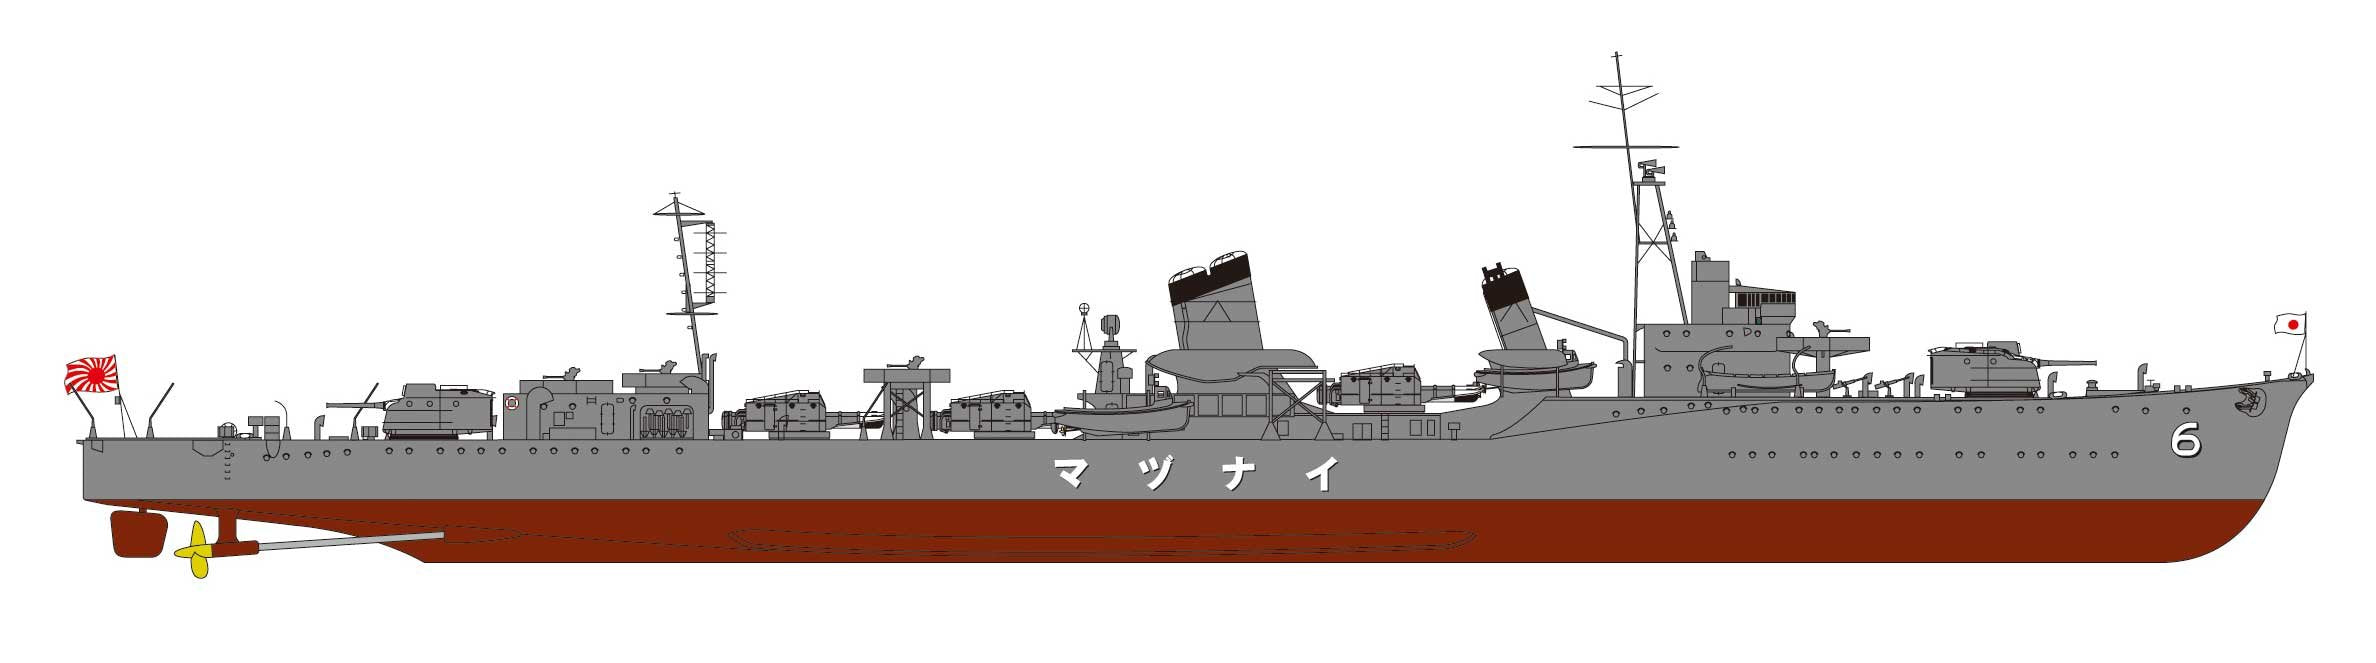 Pit Road 1/700 Japanese Navy Special Type Destroyer Den/ New World War Ii Japanese Navy Ship Equipment Set 7